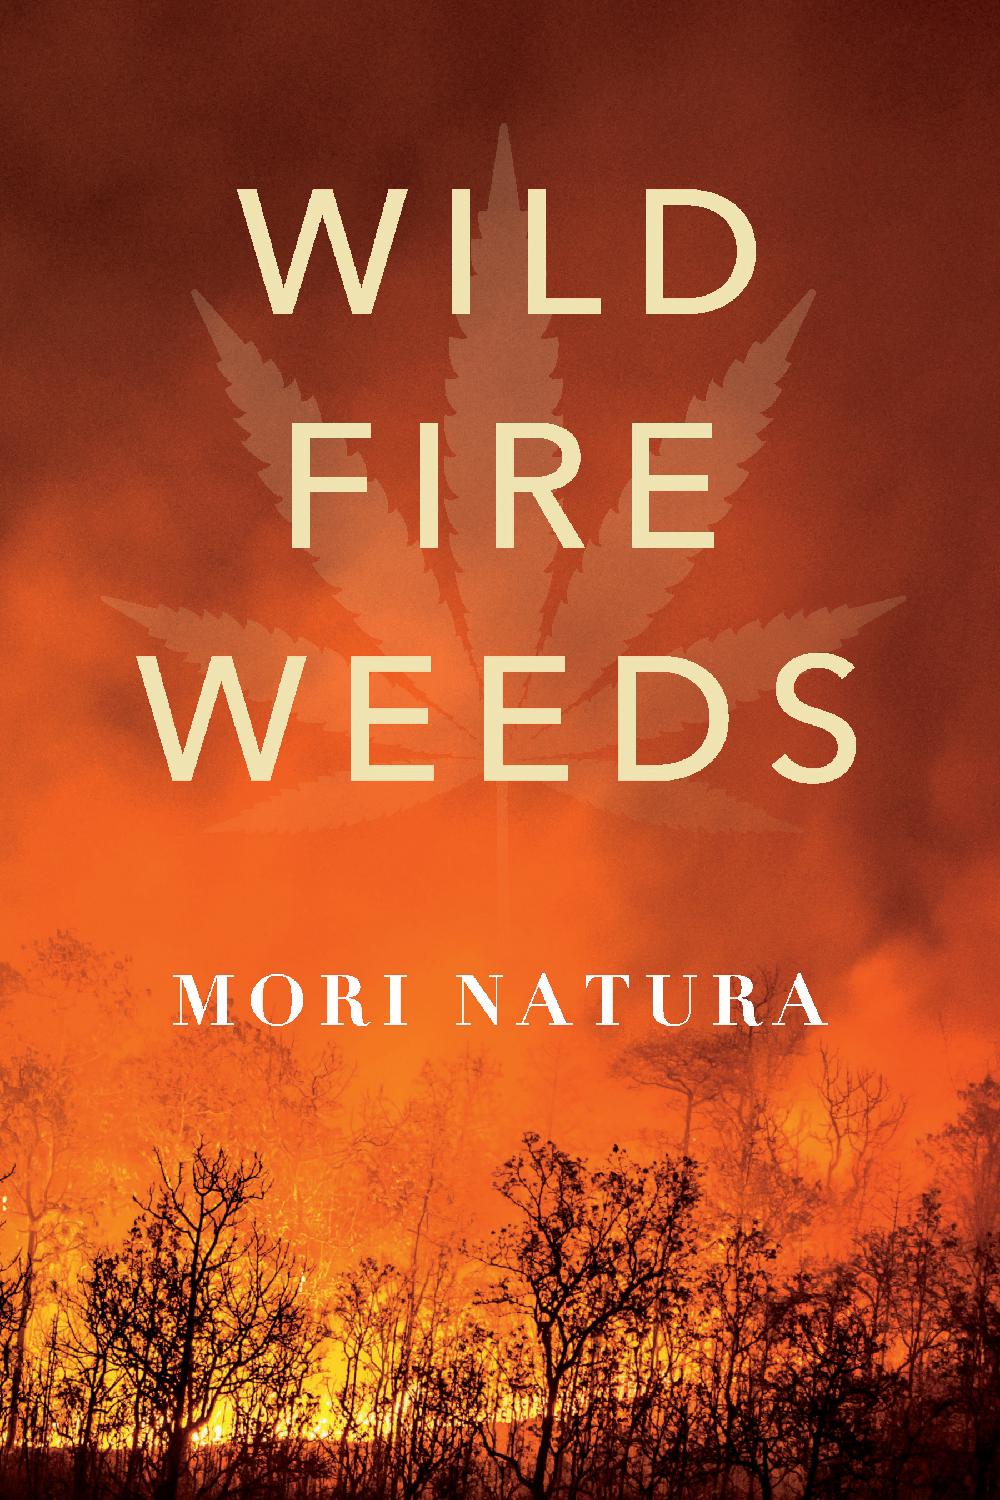 "Wildfire Weeds" released